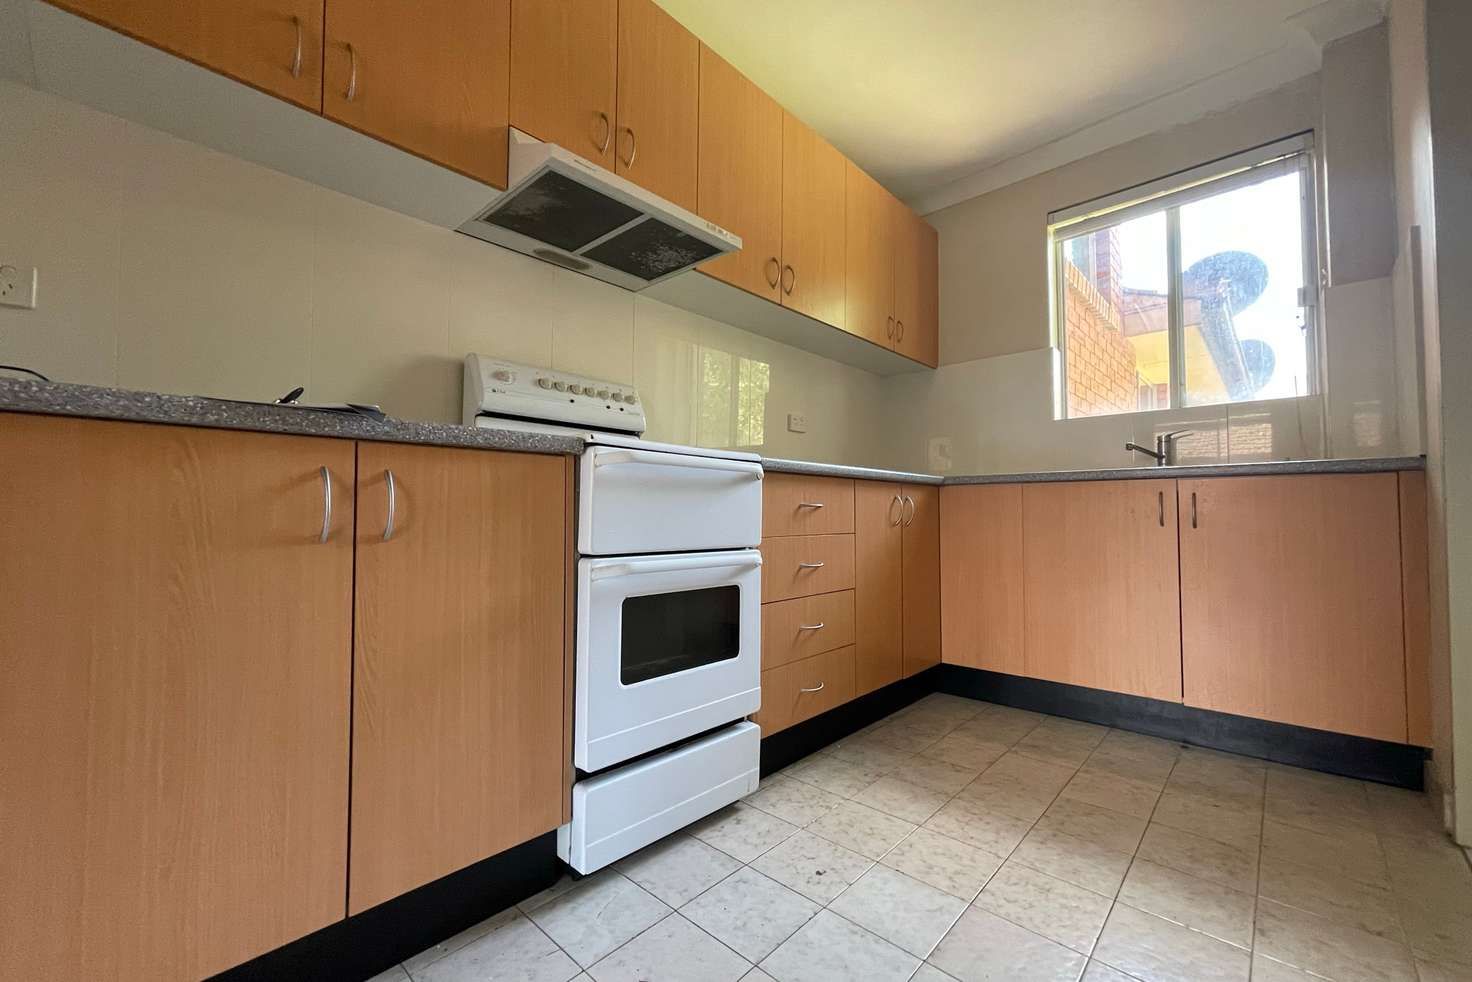 2 bedrooms Apartment / Unit / Flat in 3/60 Sackville Street FAIRFIELD NSW, 2165